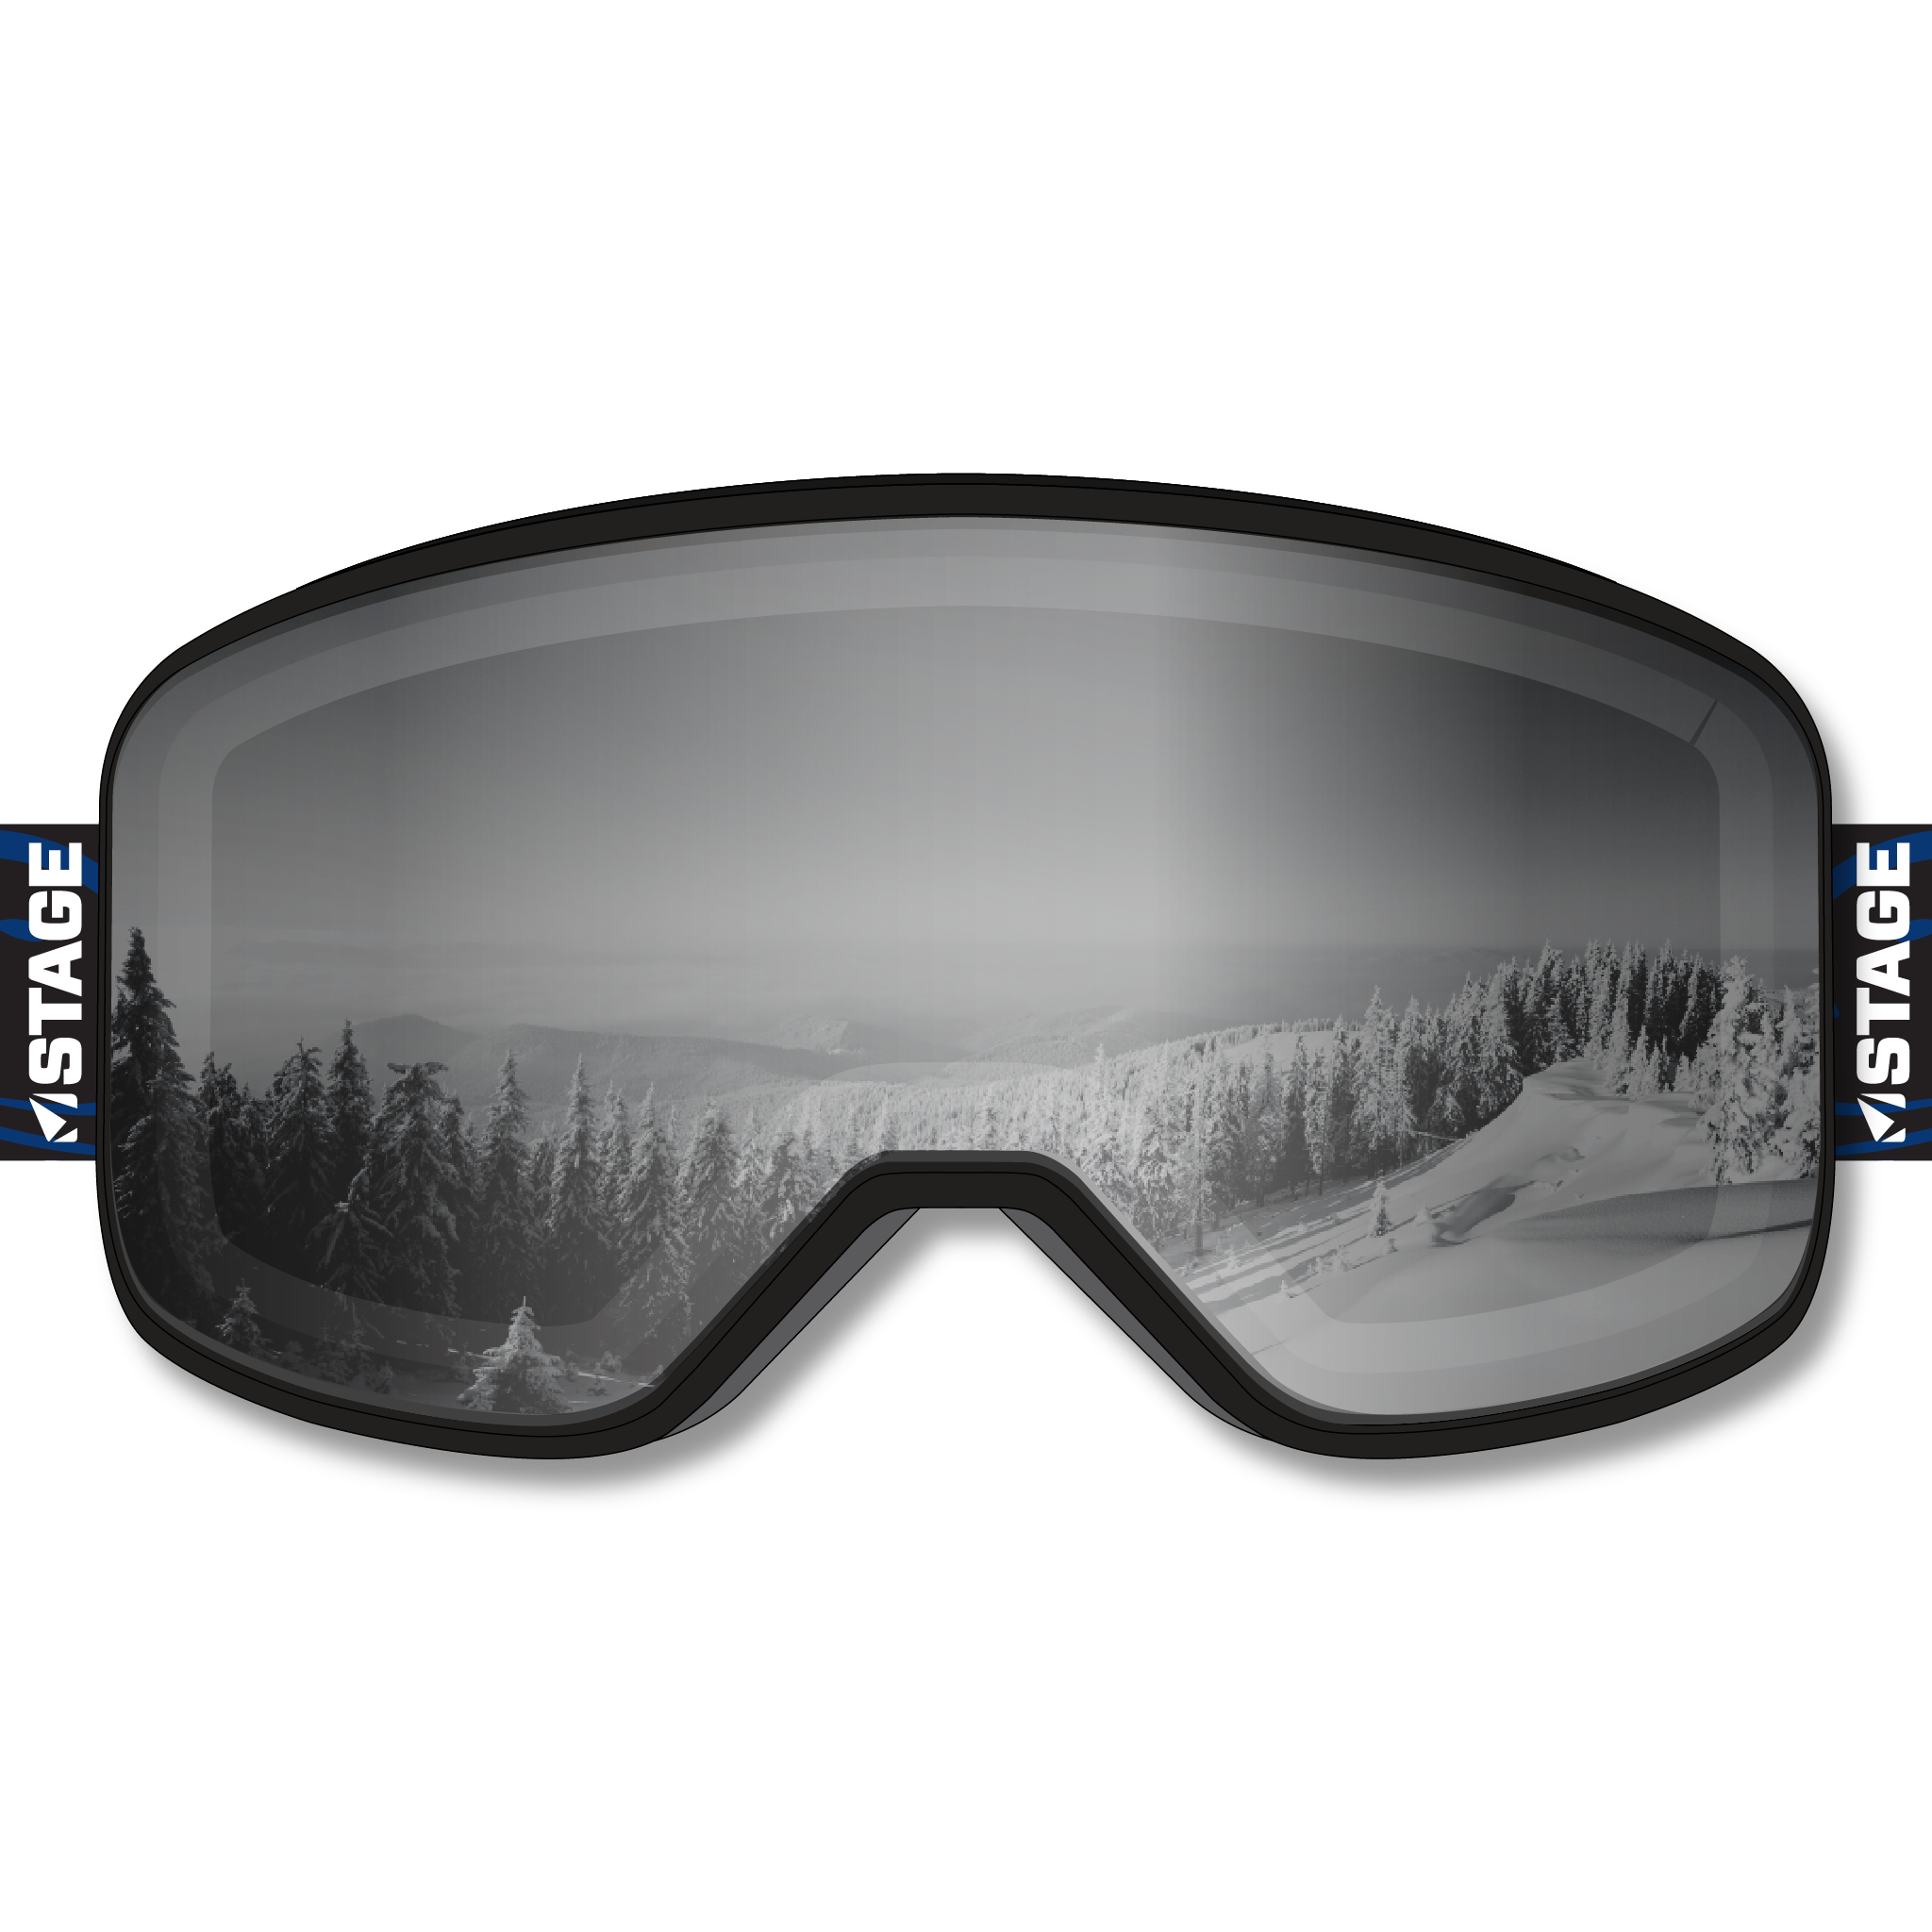 Achieve Tahoe Prop Ski Goggle - Black Frame w/ Mirror Chrome Lens - Adult Universal